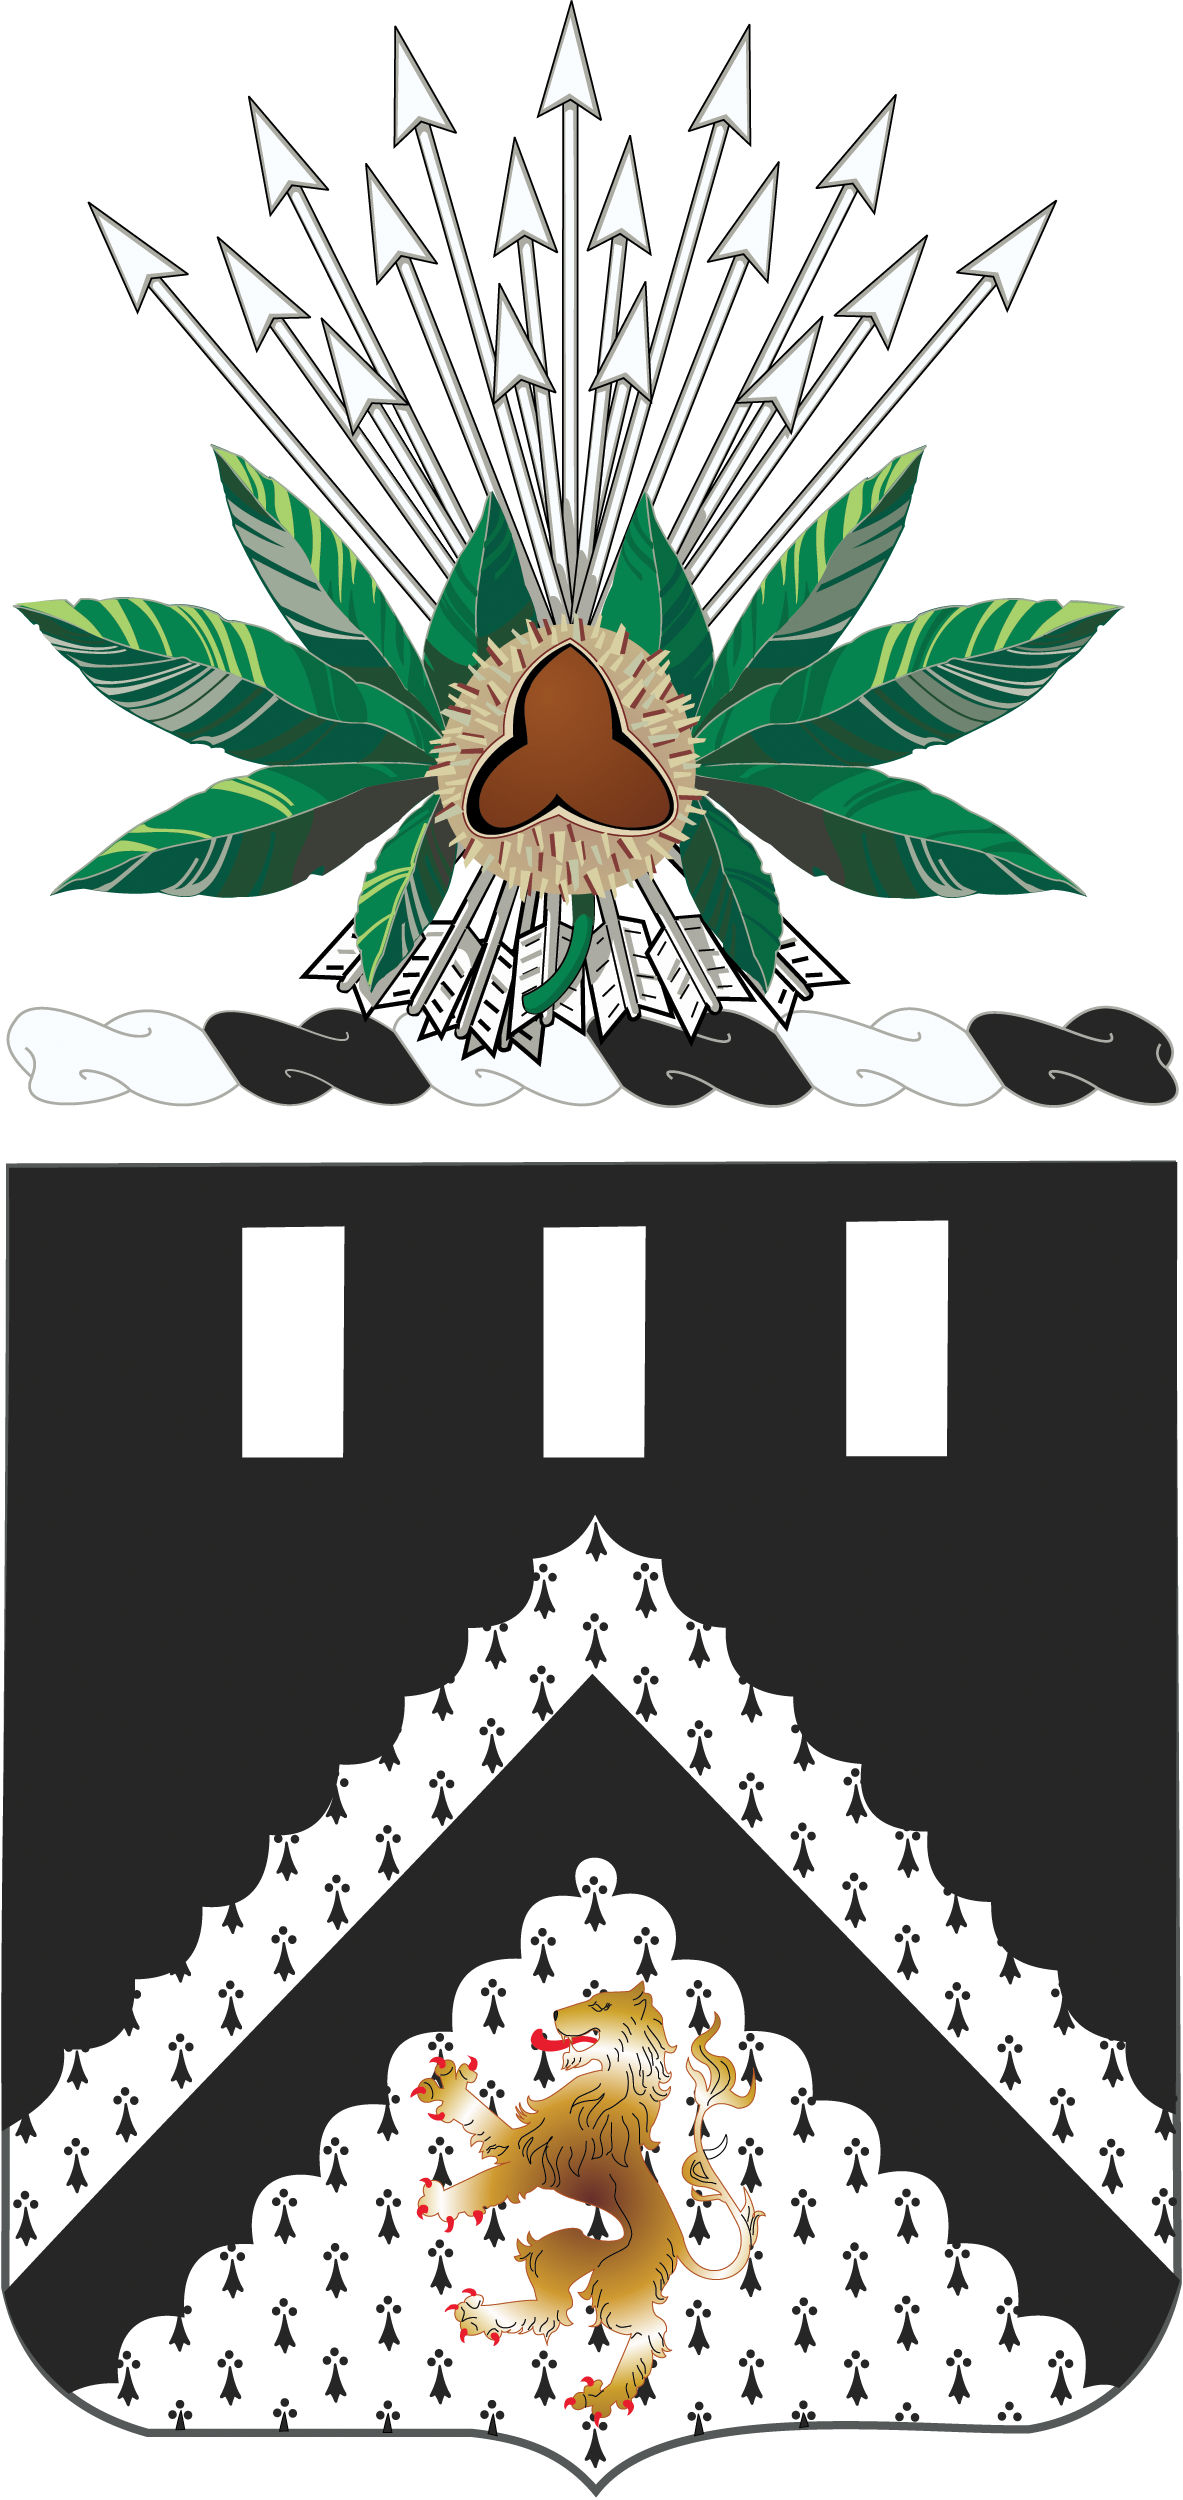 Ohio Army National Guard Company D, 1st Battalion, 148th Infantry Regimentinsignia